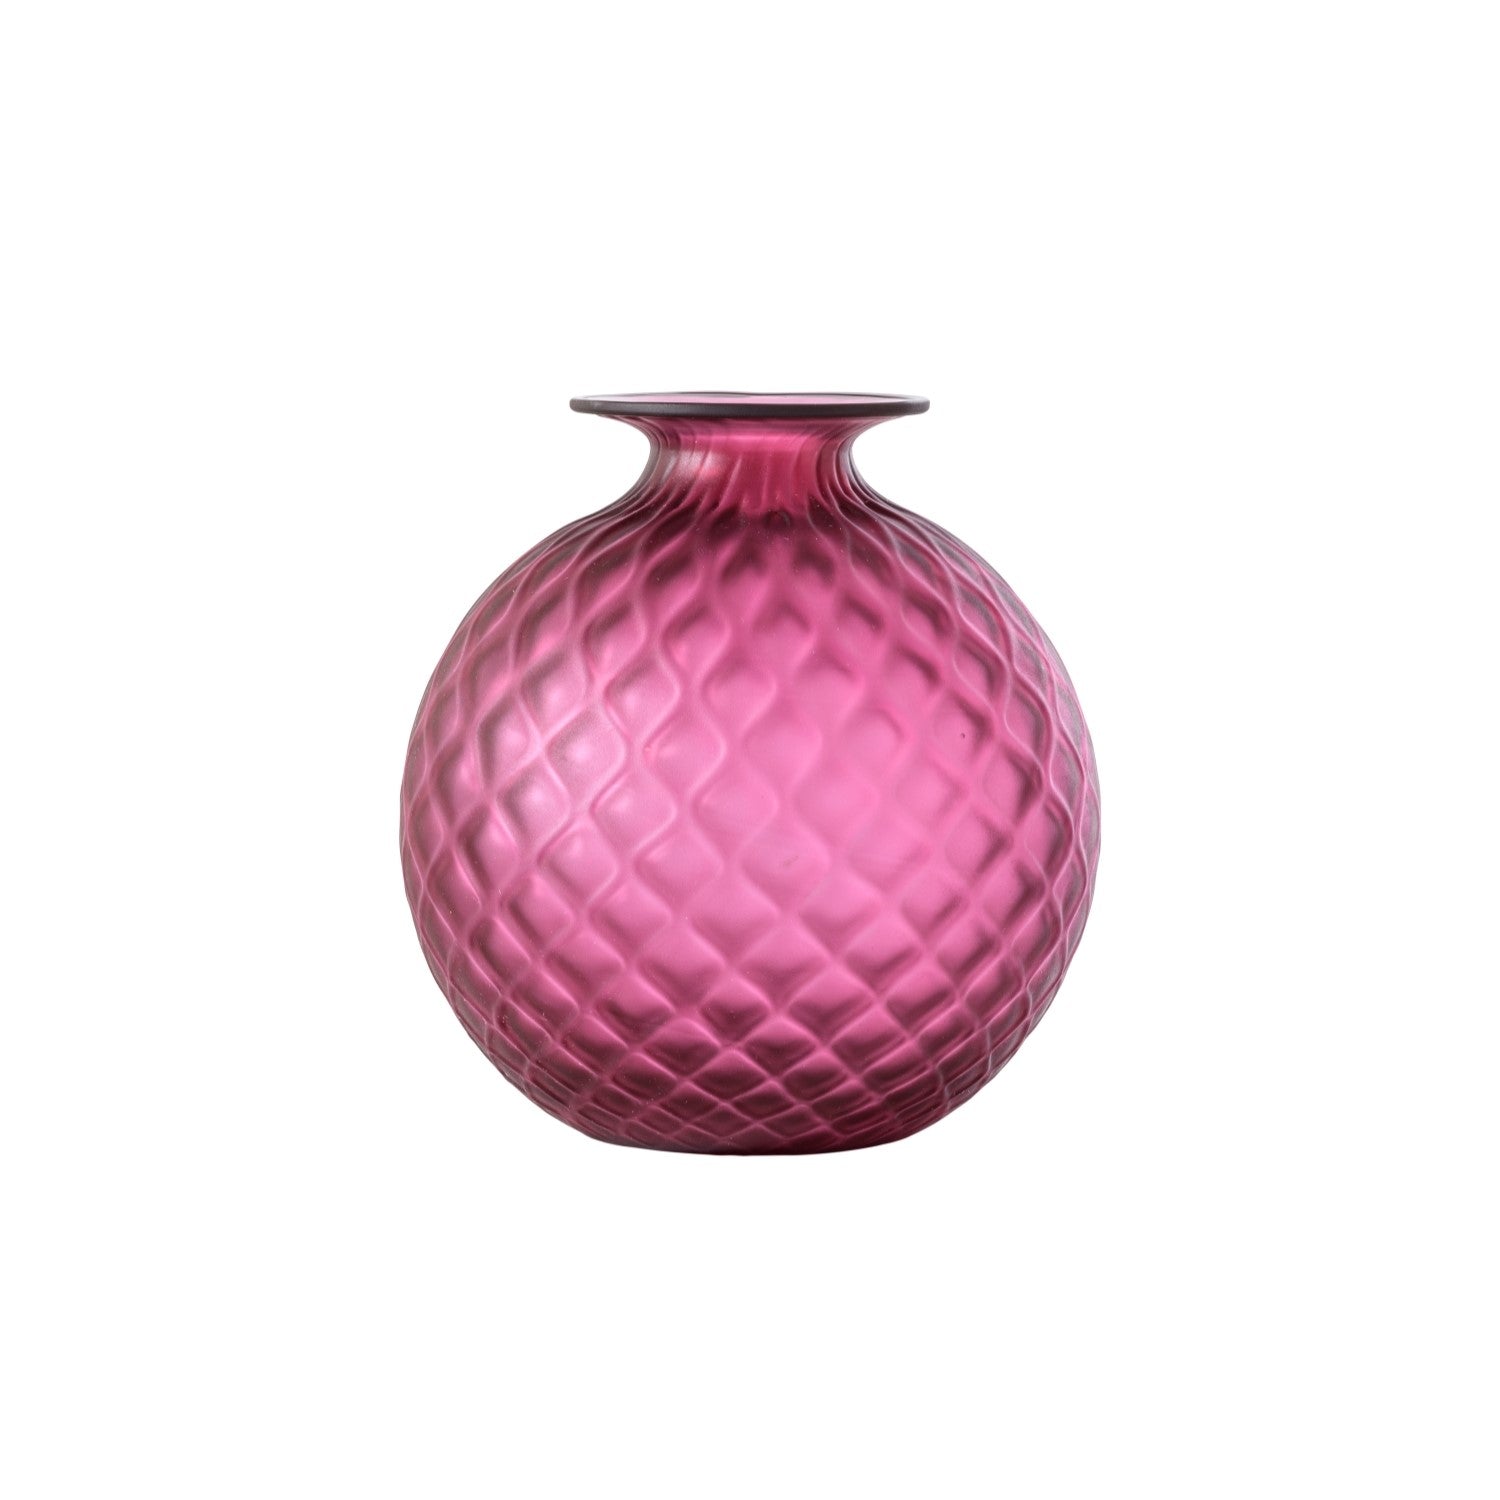 Venini Kleine sandgestrahlte Balloton-Vase mit Einzelblume